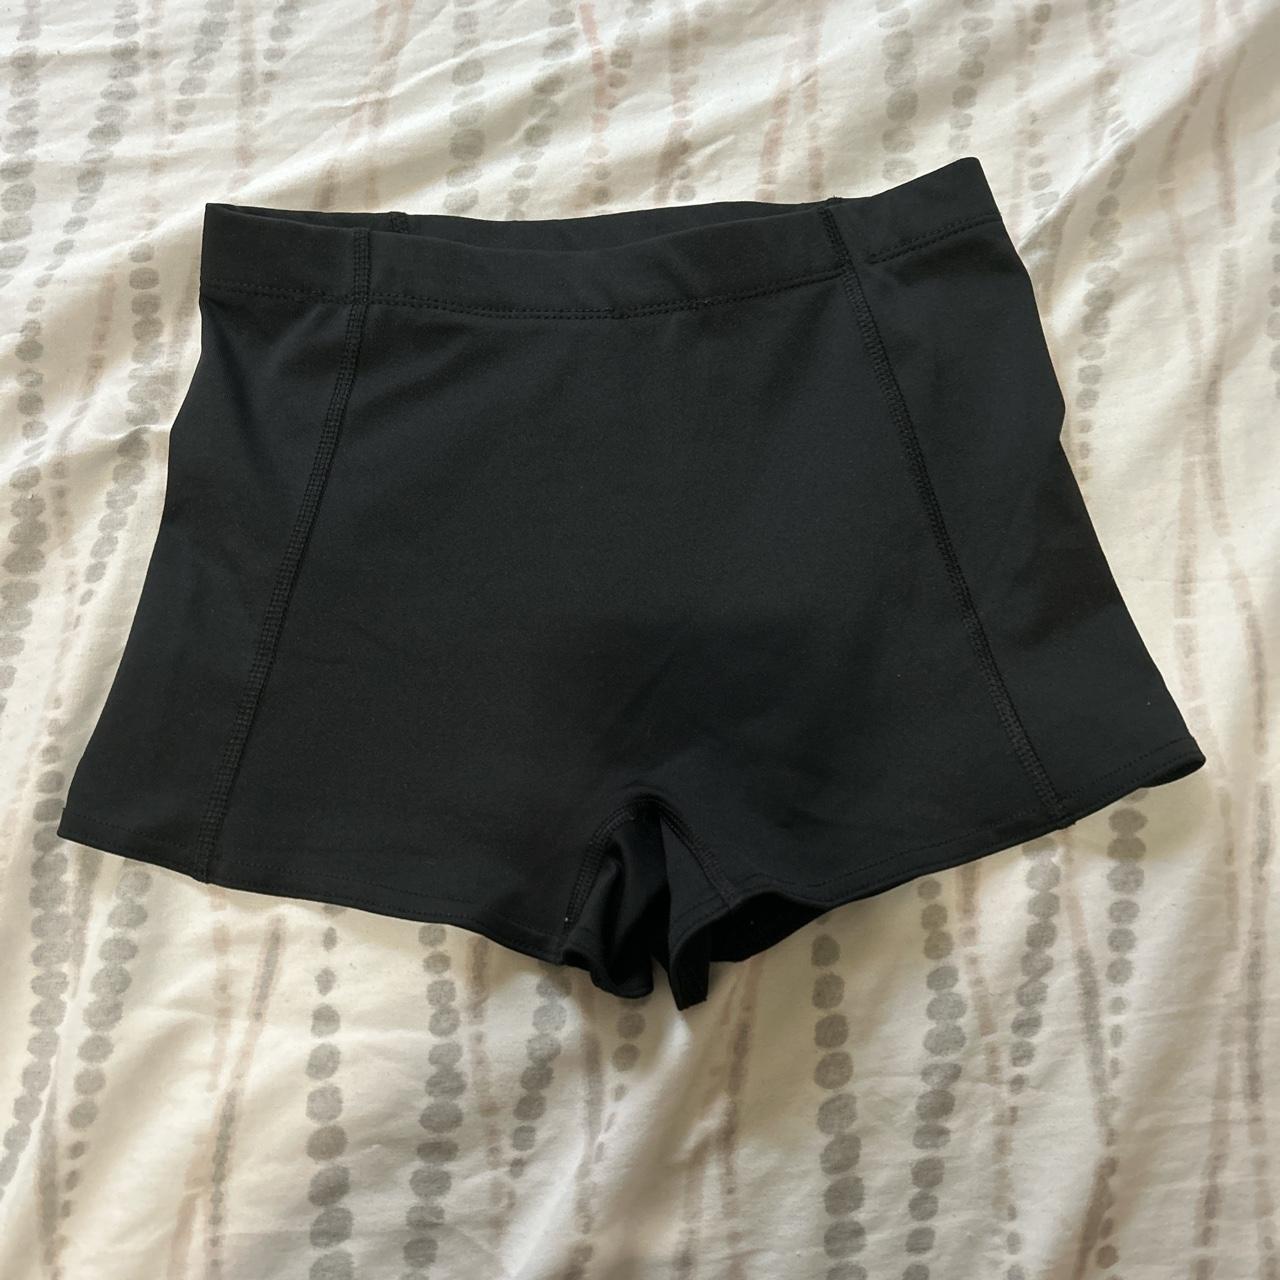 black volleyball shorts for kids, size medium (8-10)... - Depop